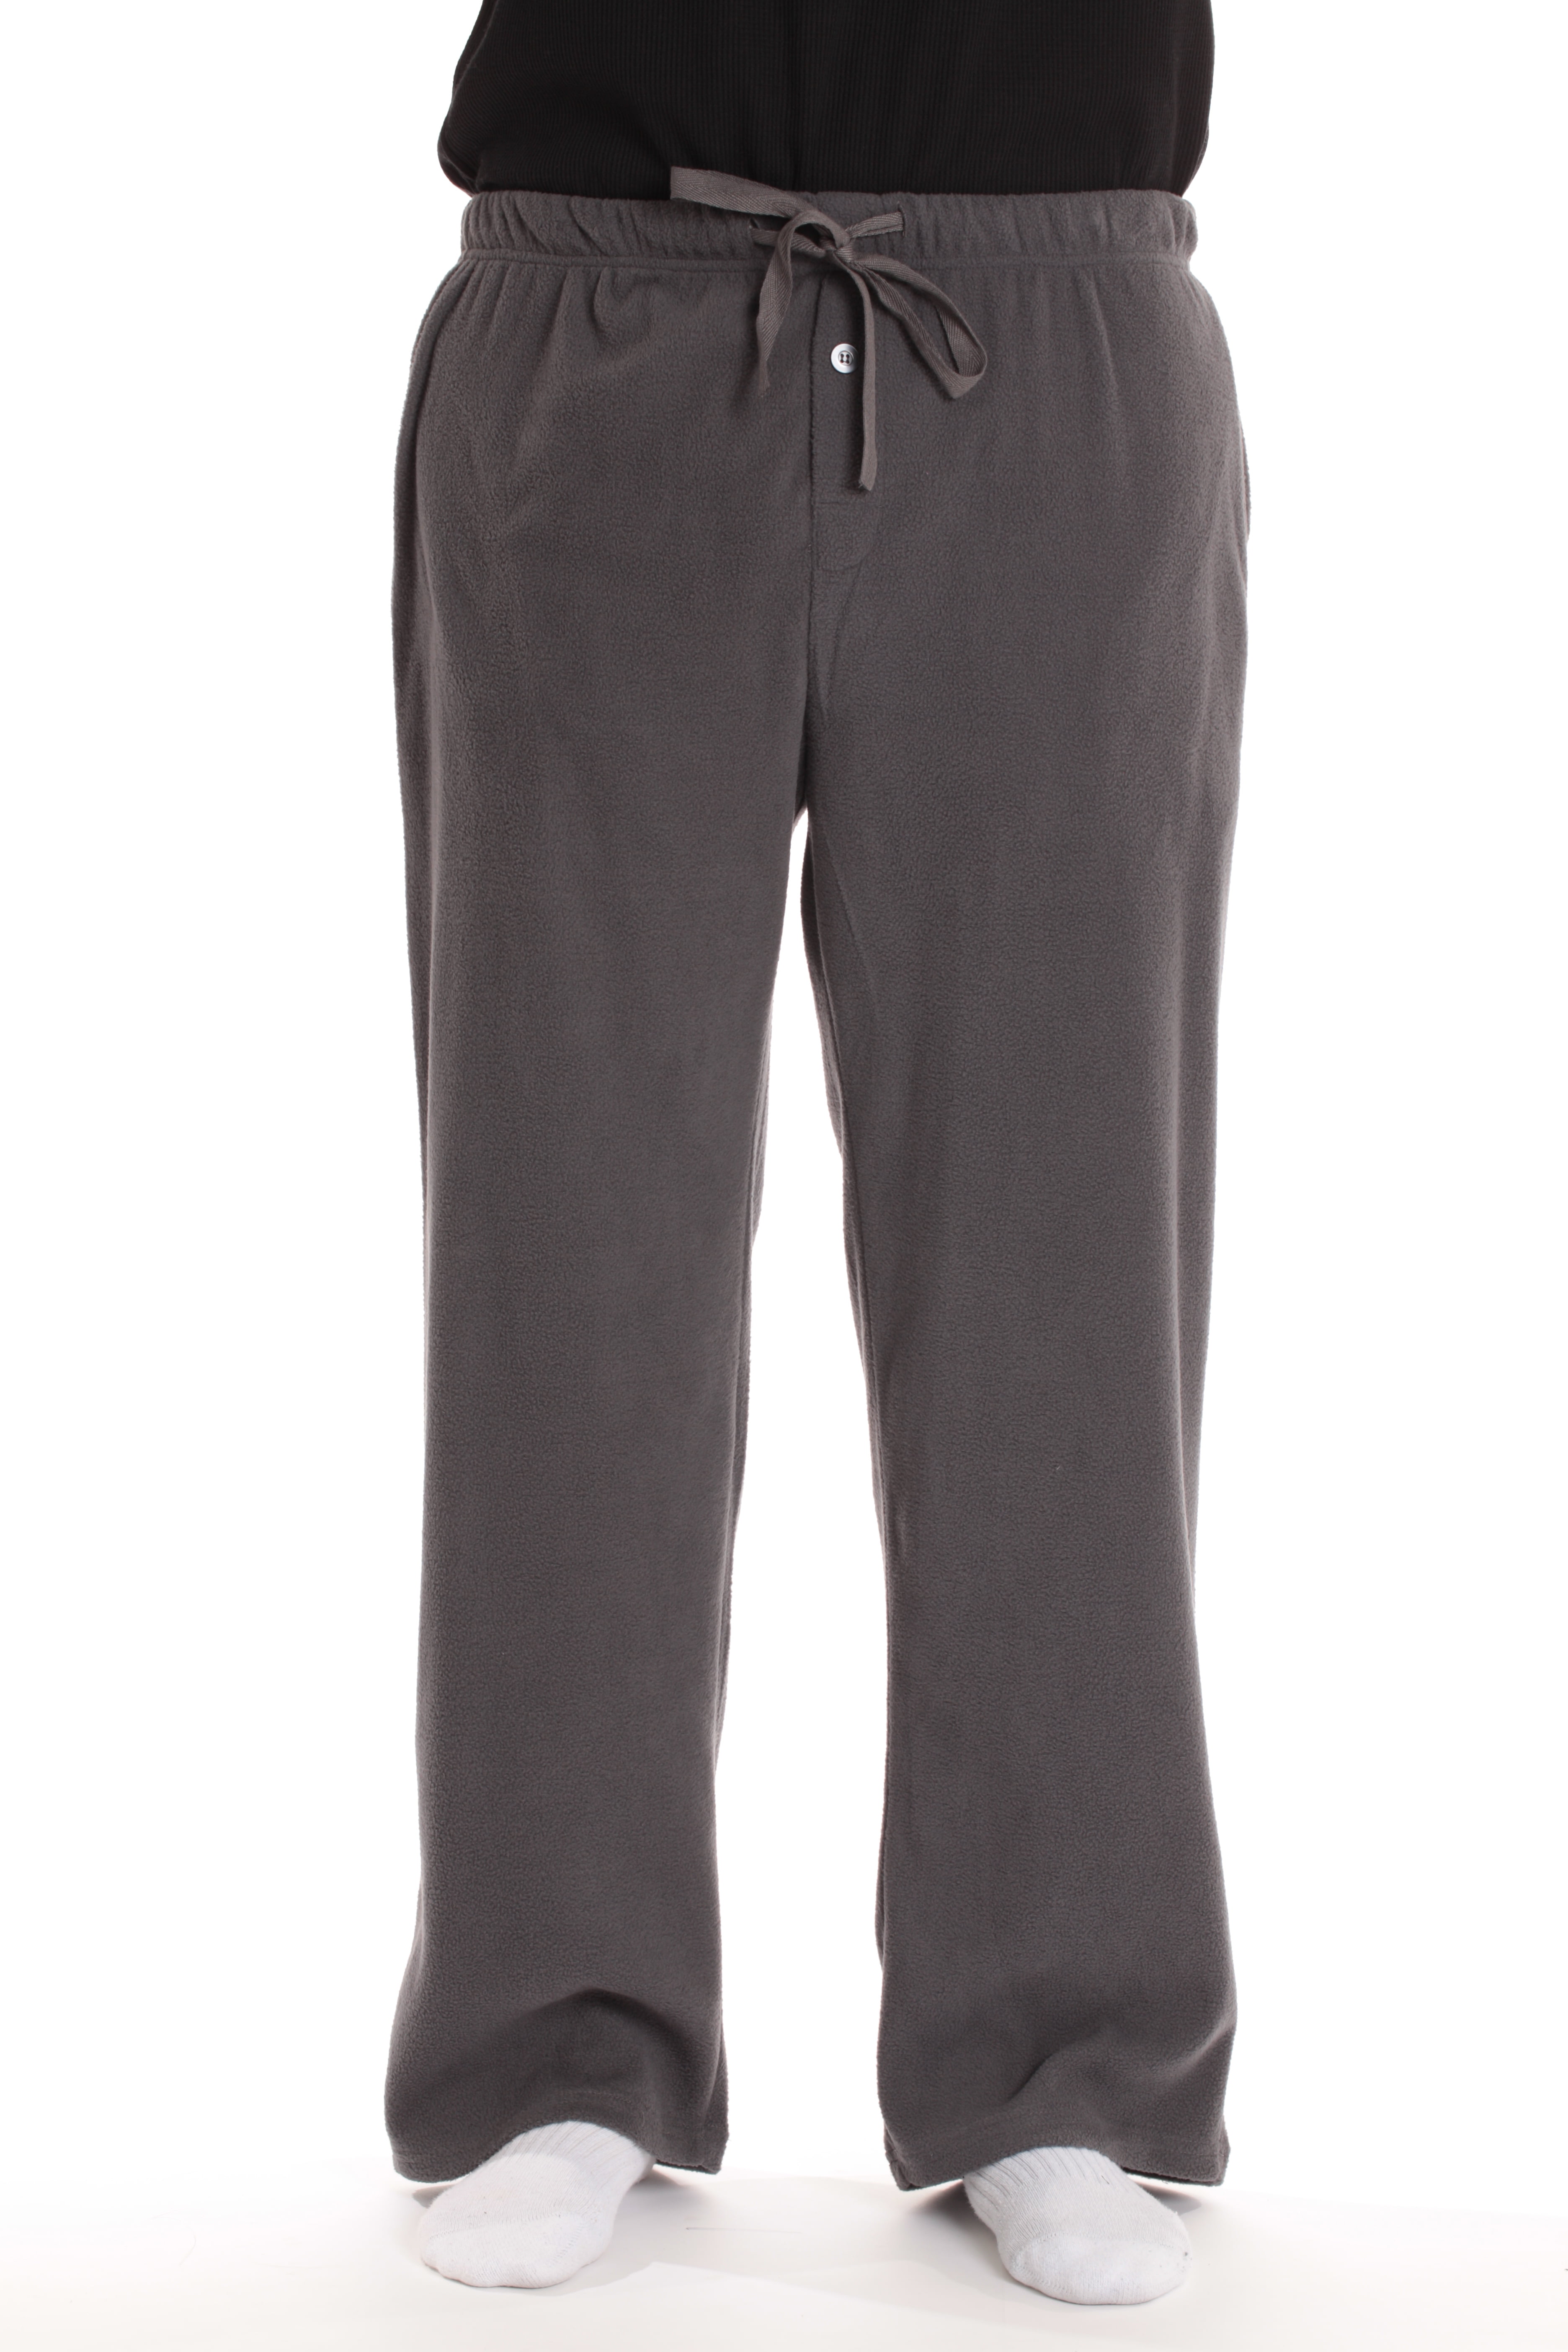 #FollowMe Microfleece Mens Pajama Pants with Pockets (Charcoal, XX ...